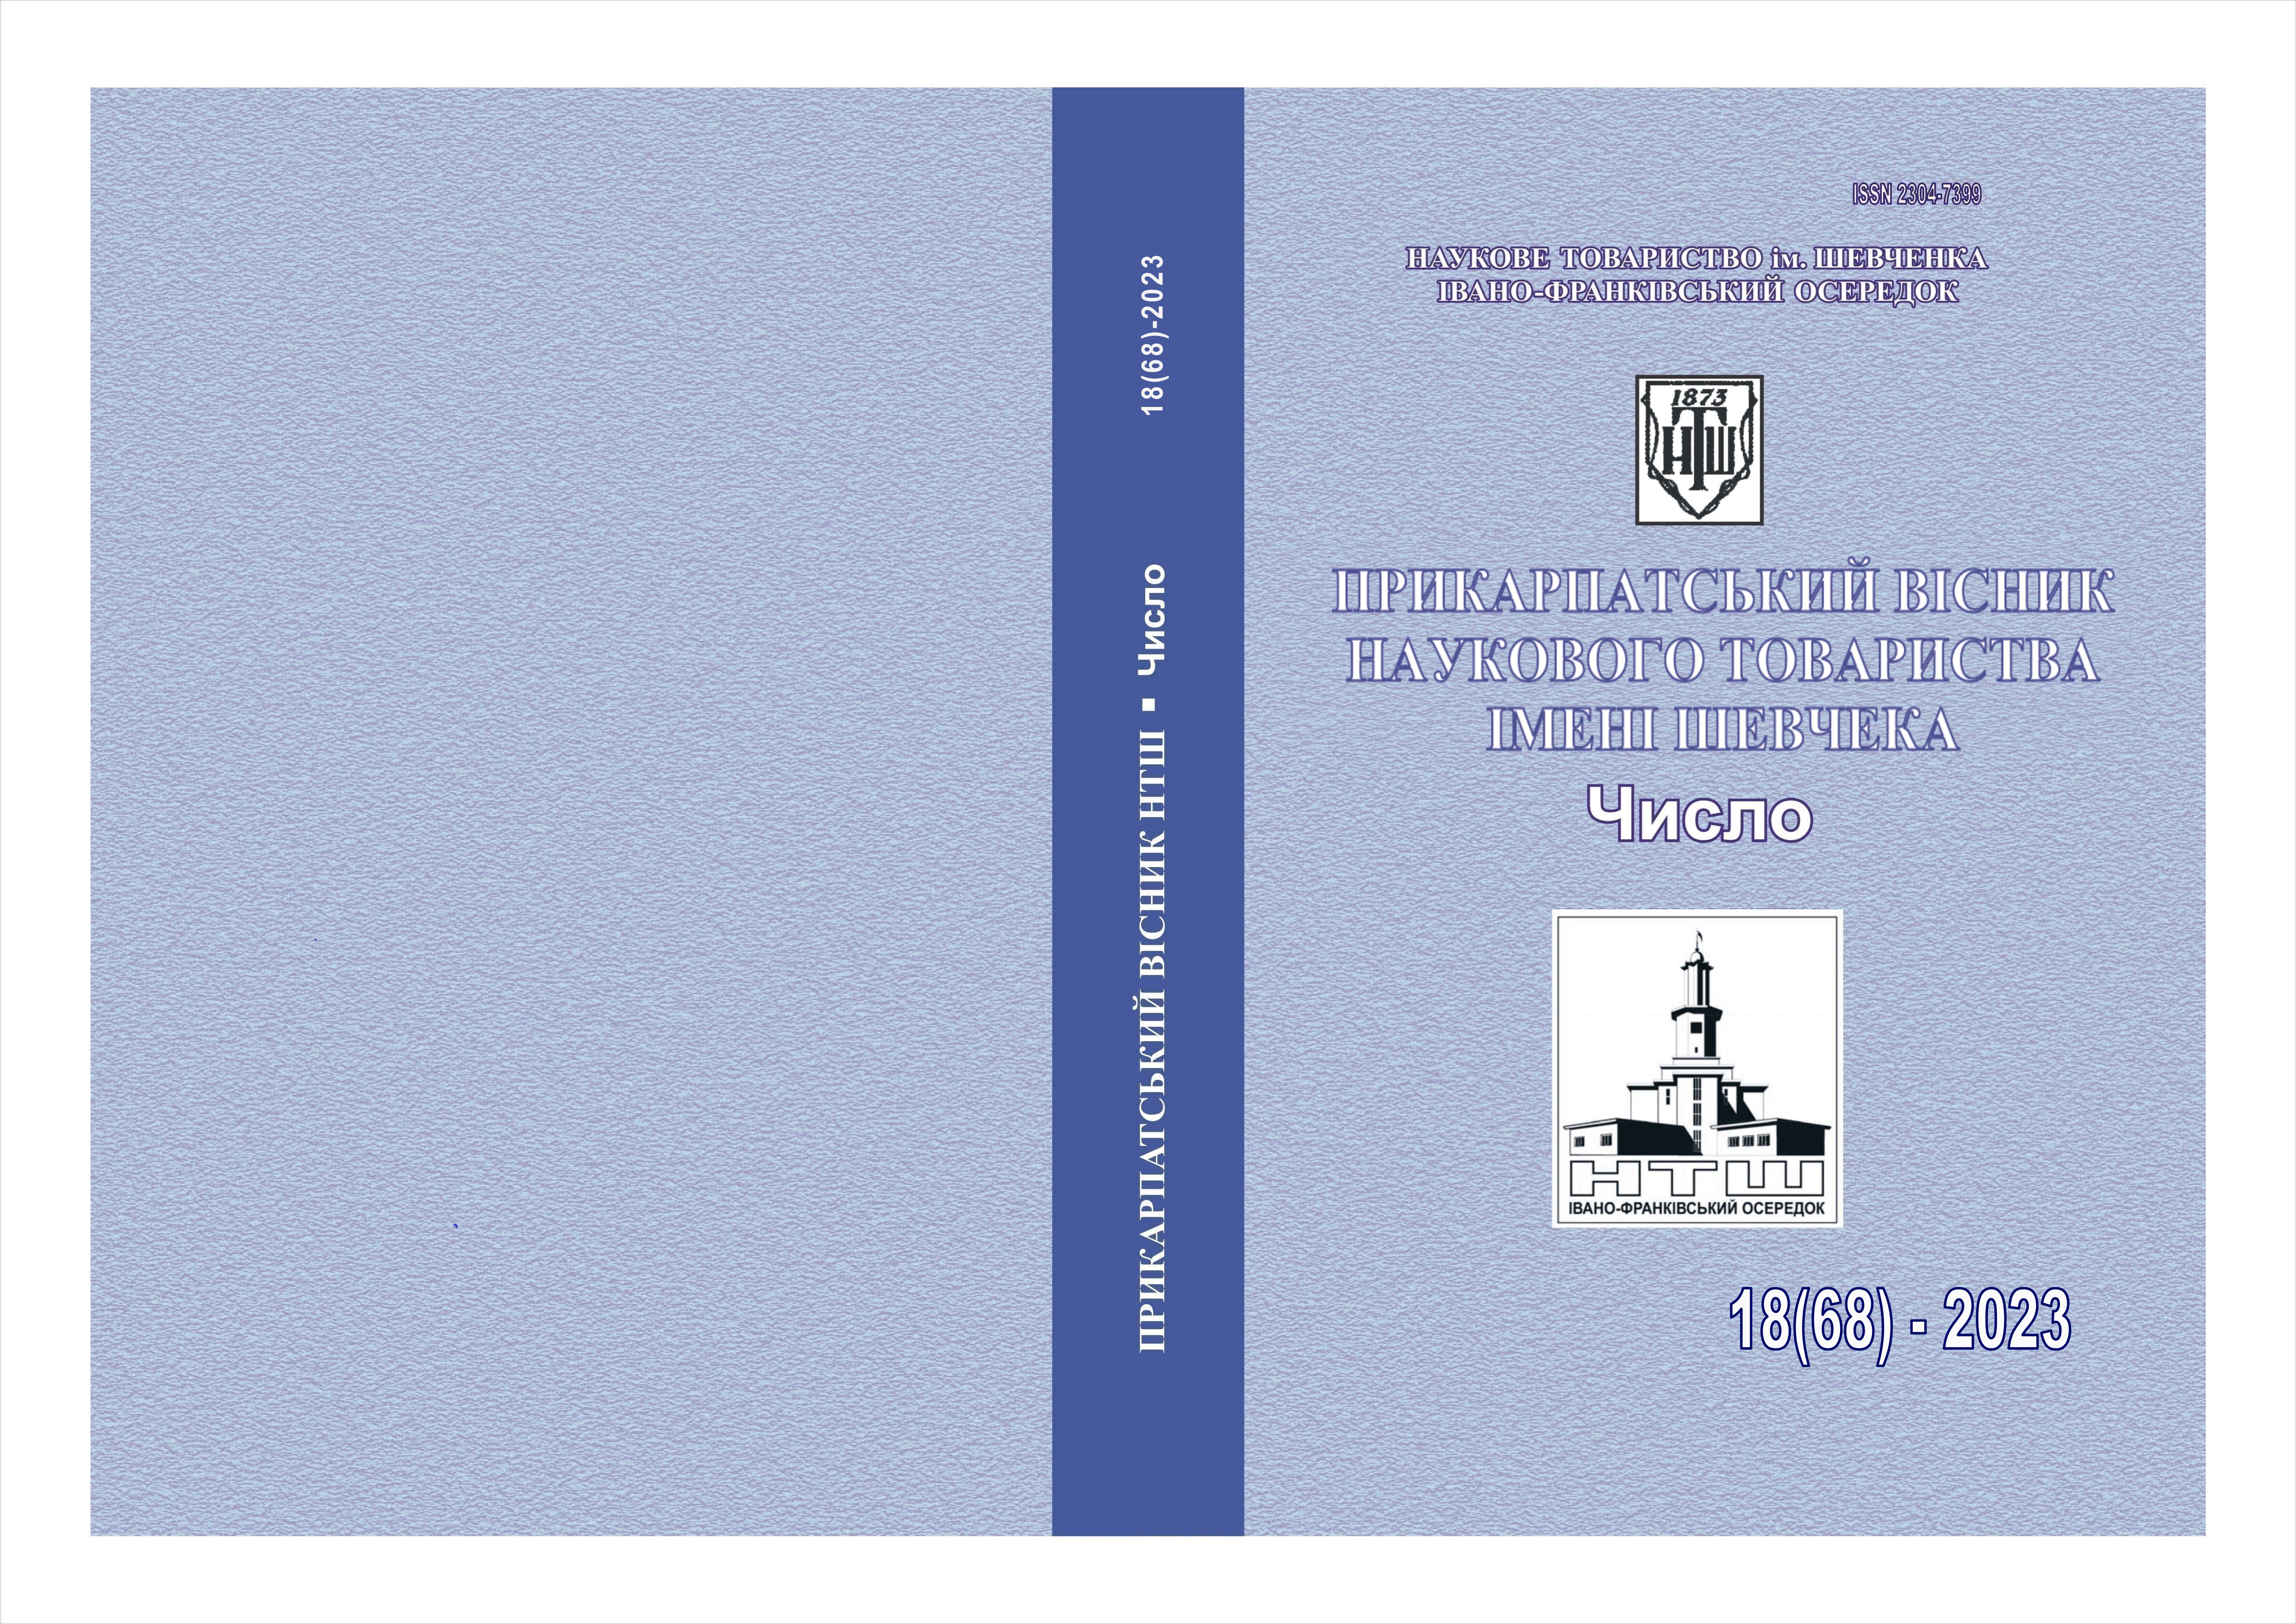 					View No. 18(68) (2023): PRECARPATHIAN BULLETIN OF THE SHEVCHENKO SCIENTIFIC SOCIETY   Number
				